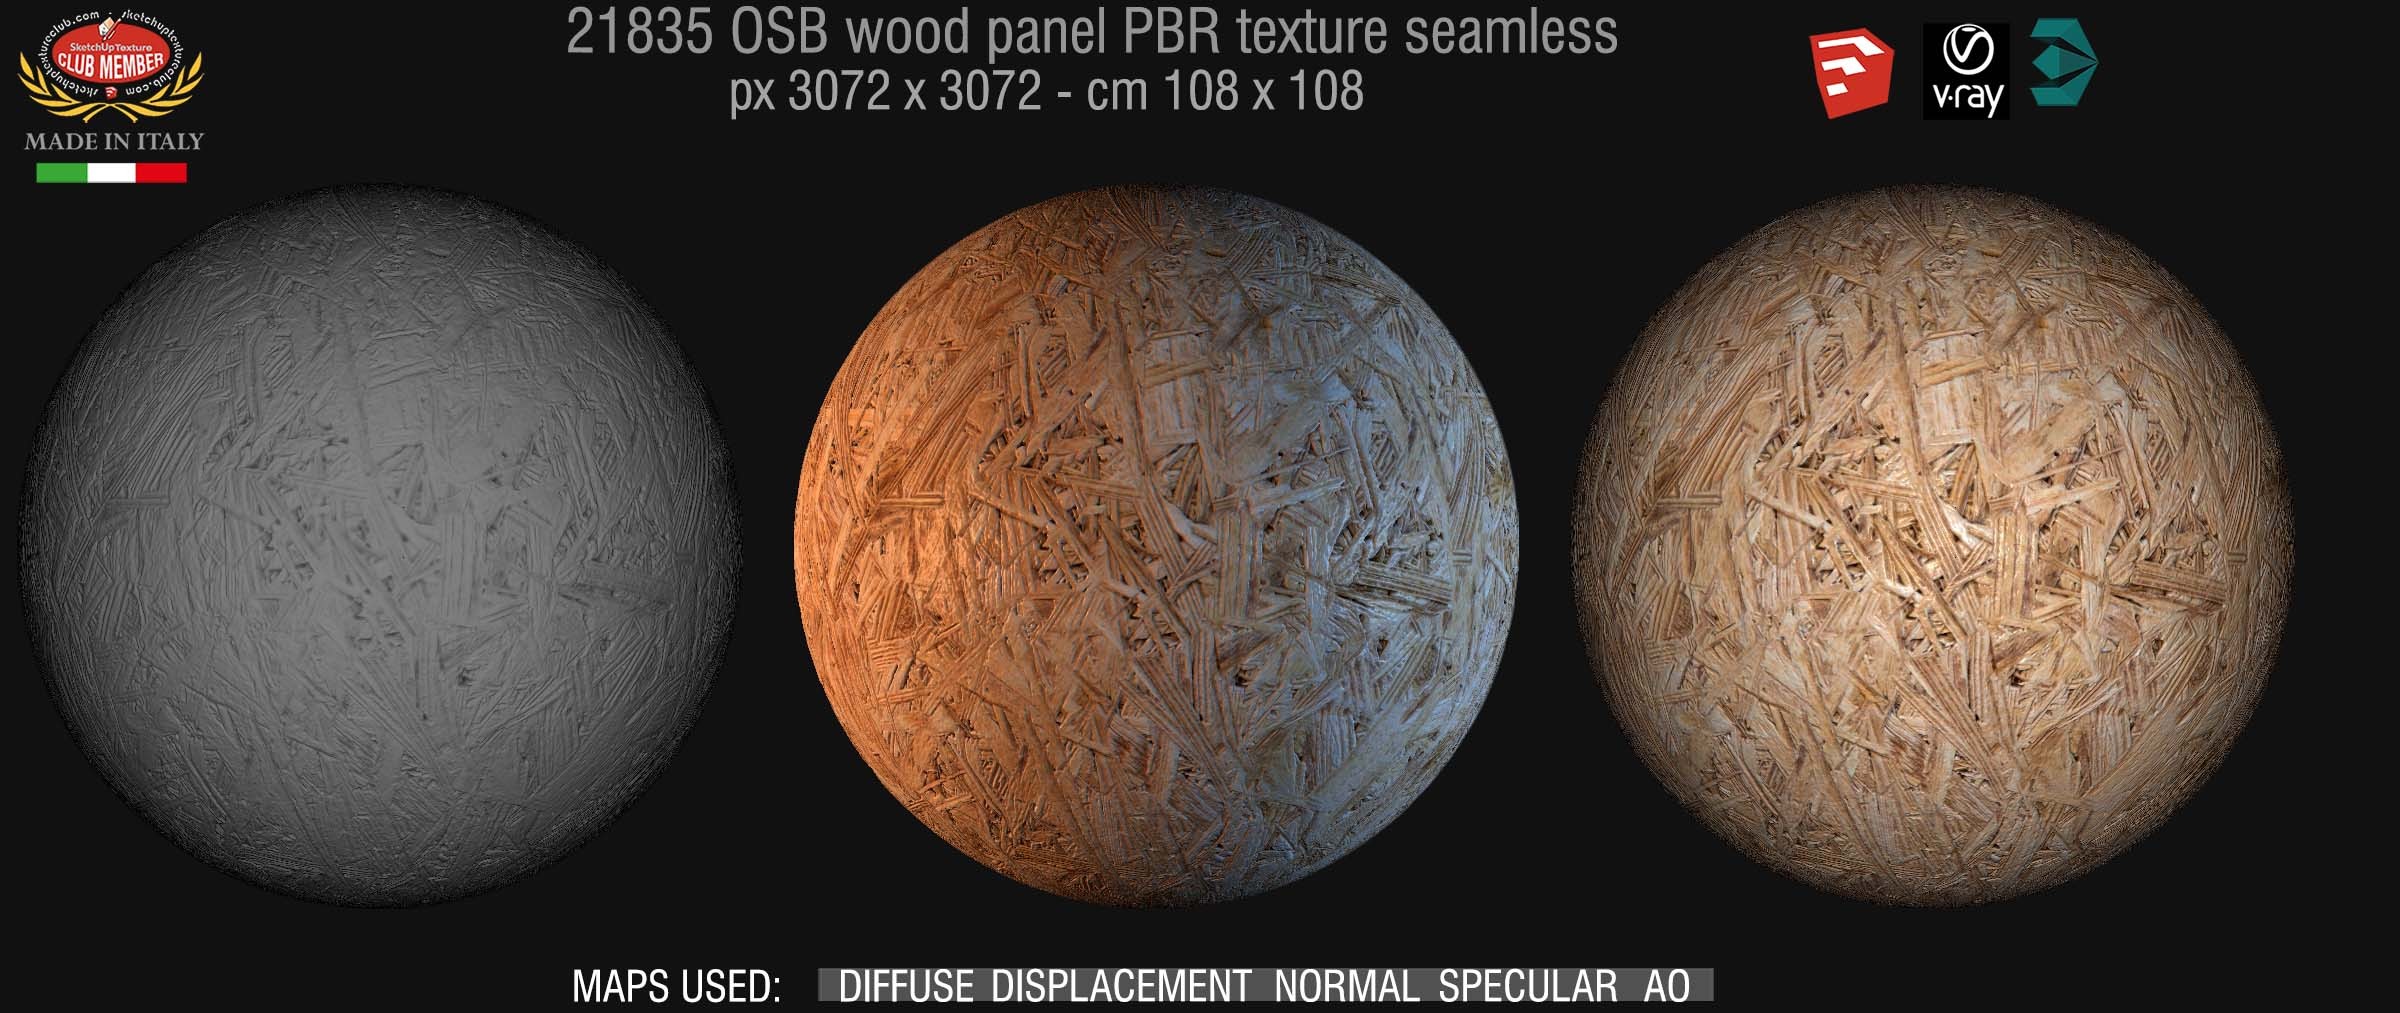 21835 OSB wood panel PBR texture seamless demo